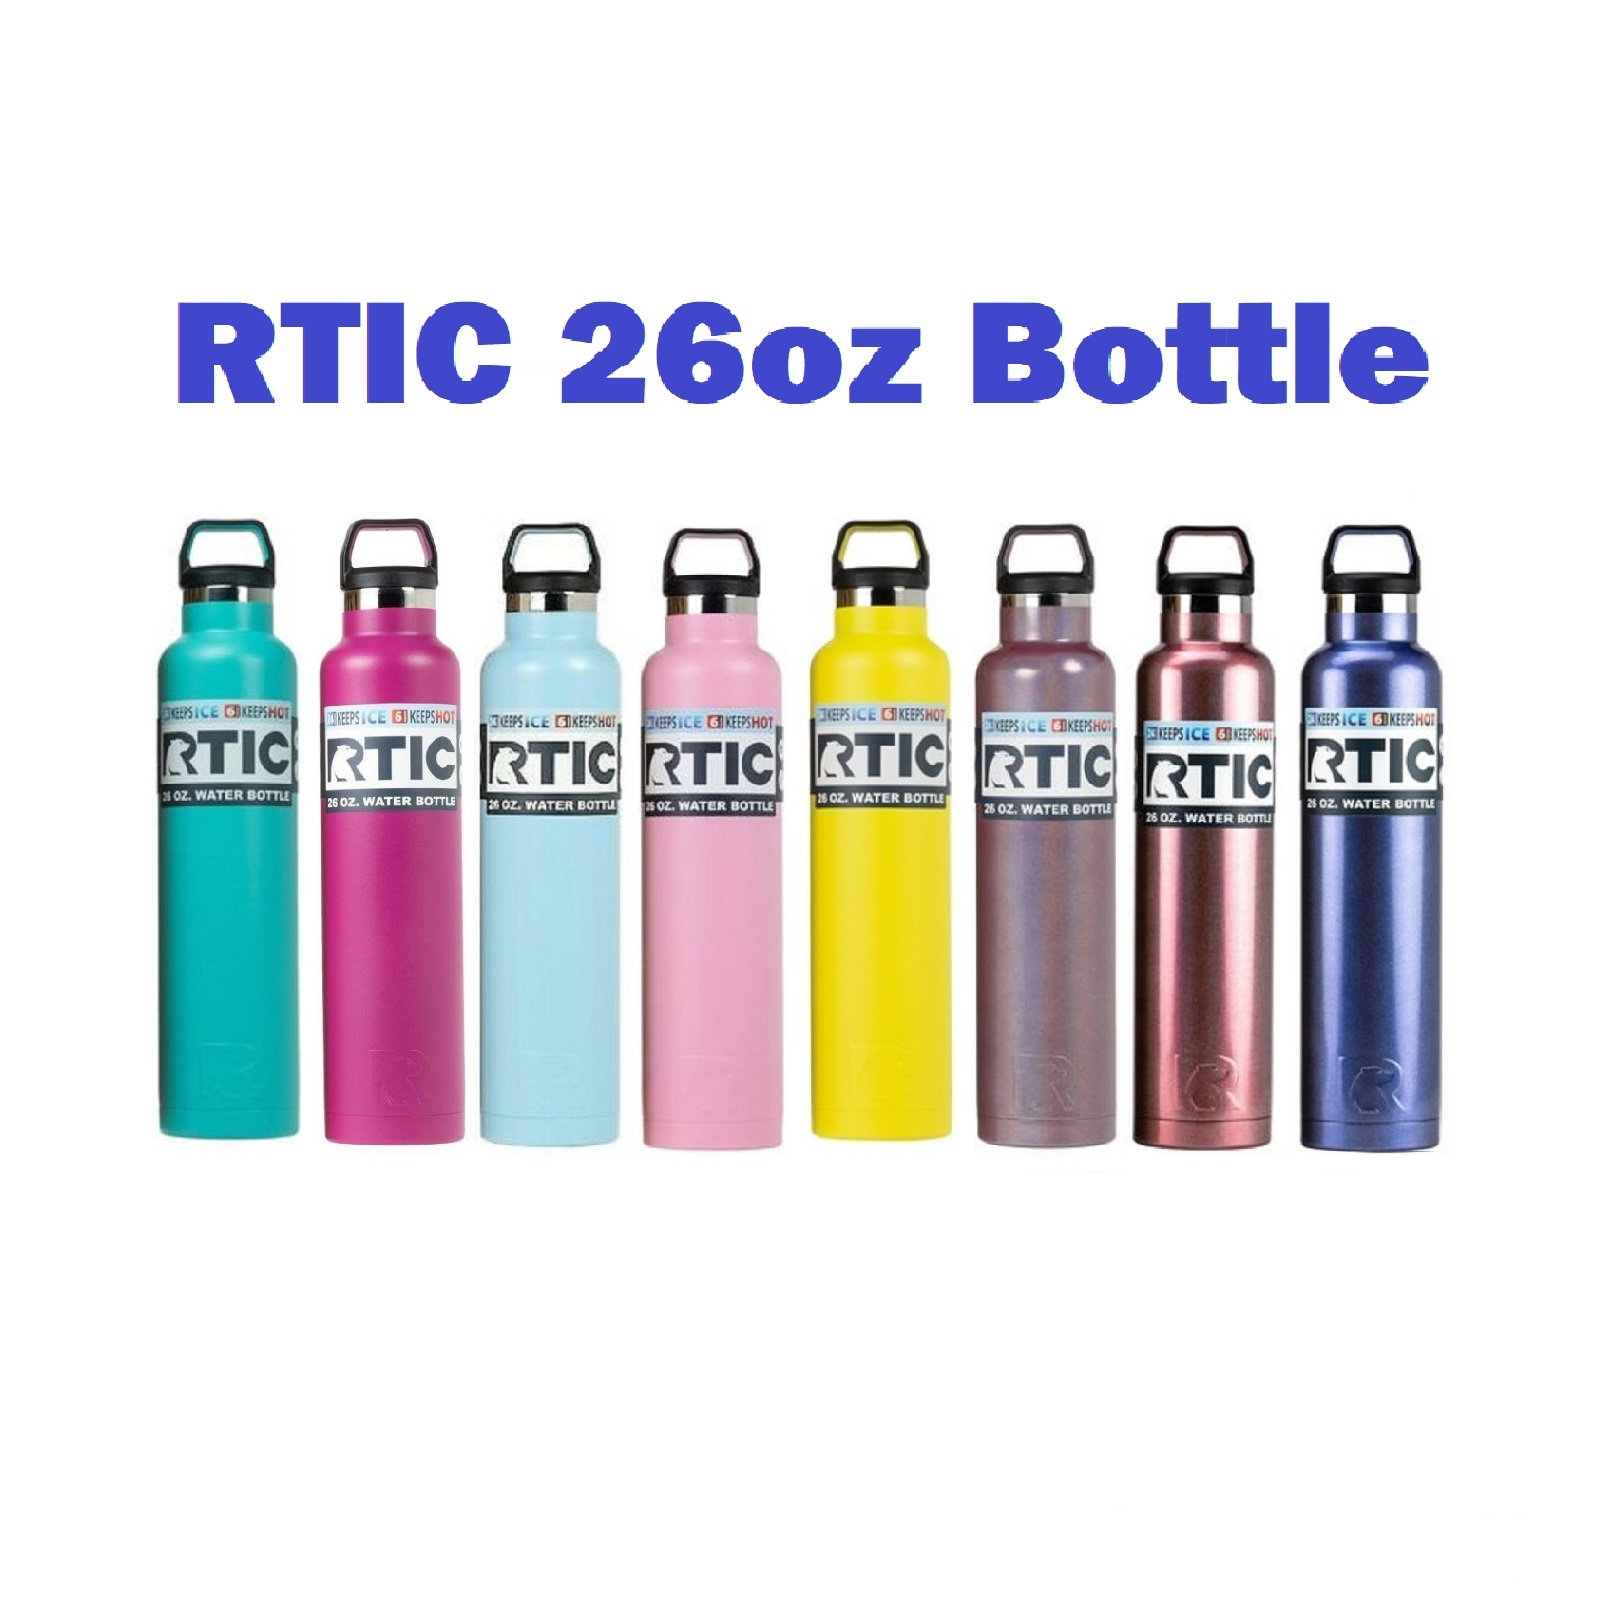 https://us.carlopacific.com/wp-content/uploads/2020/03/RTIC-26oz-Bottle-1.jpg